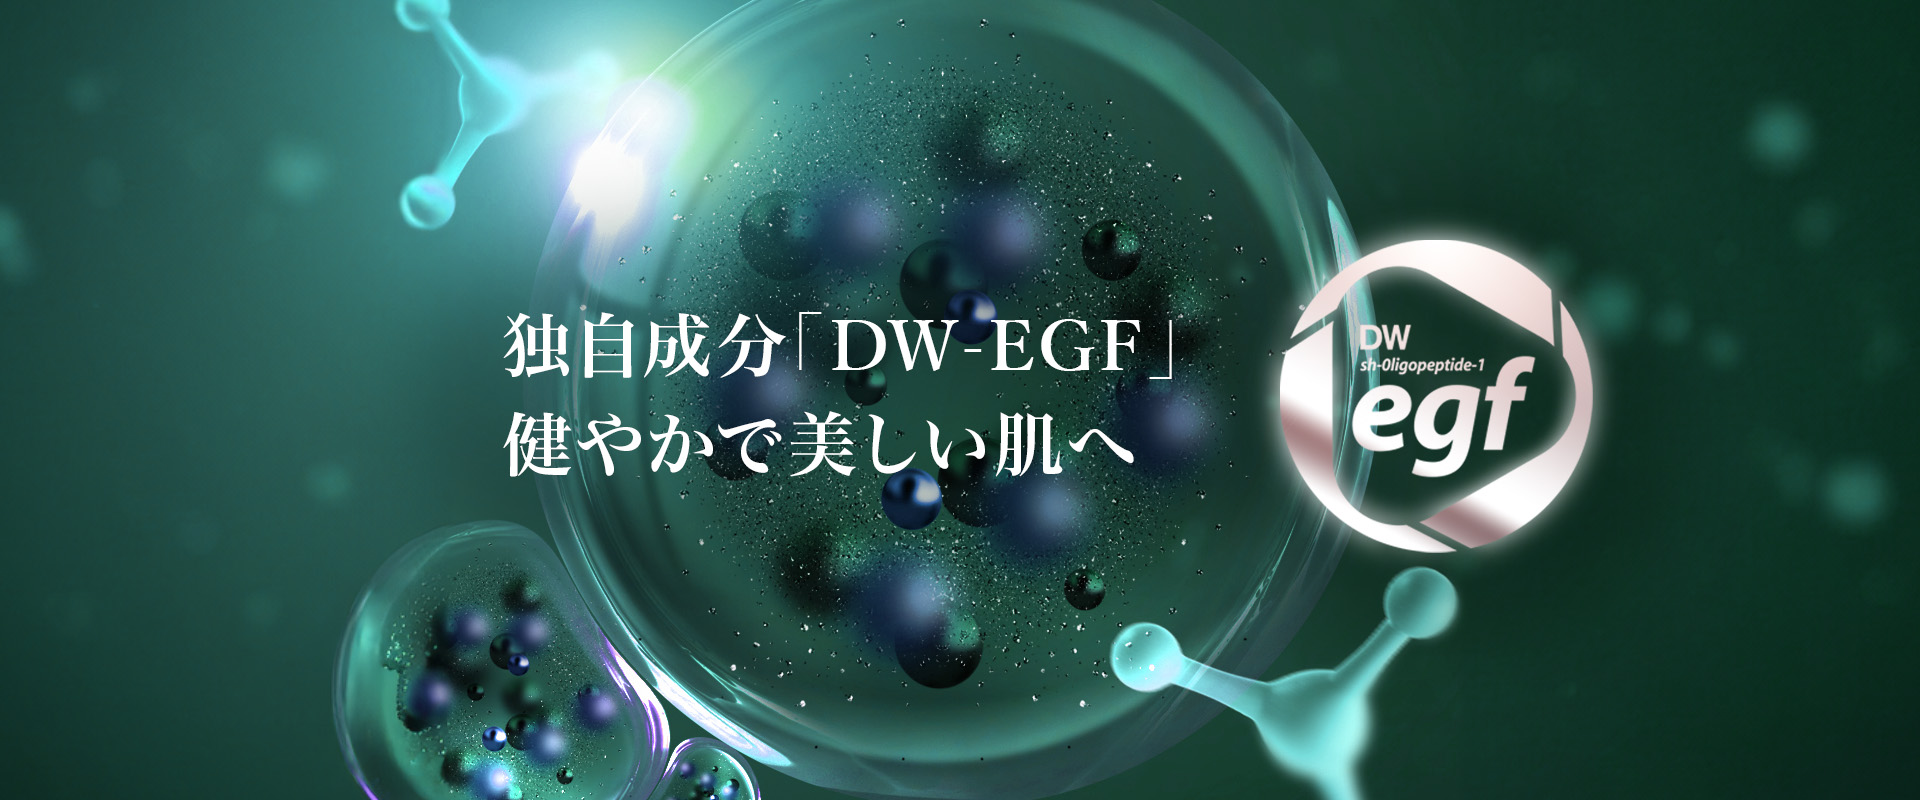 DW-EGF